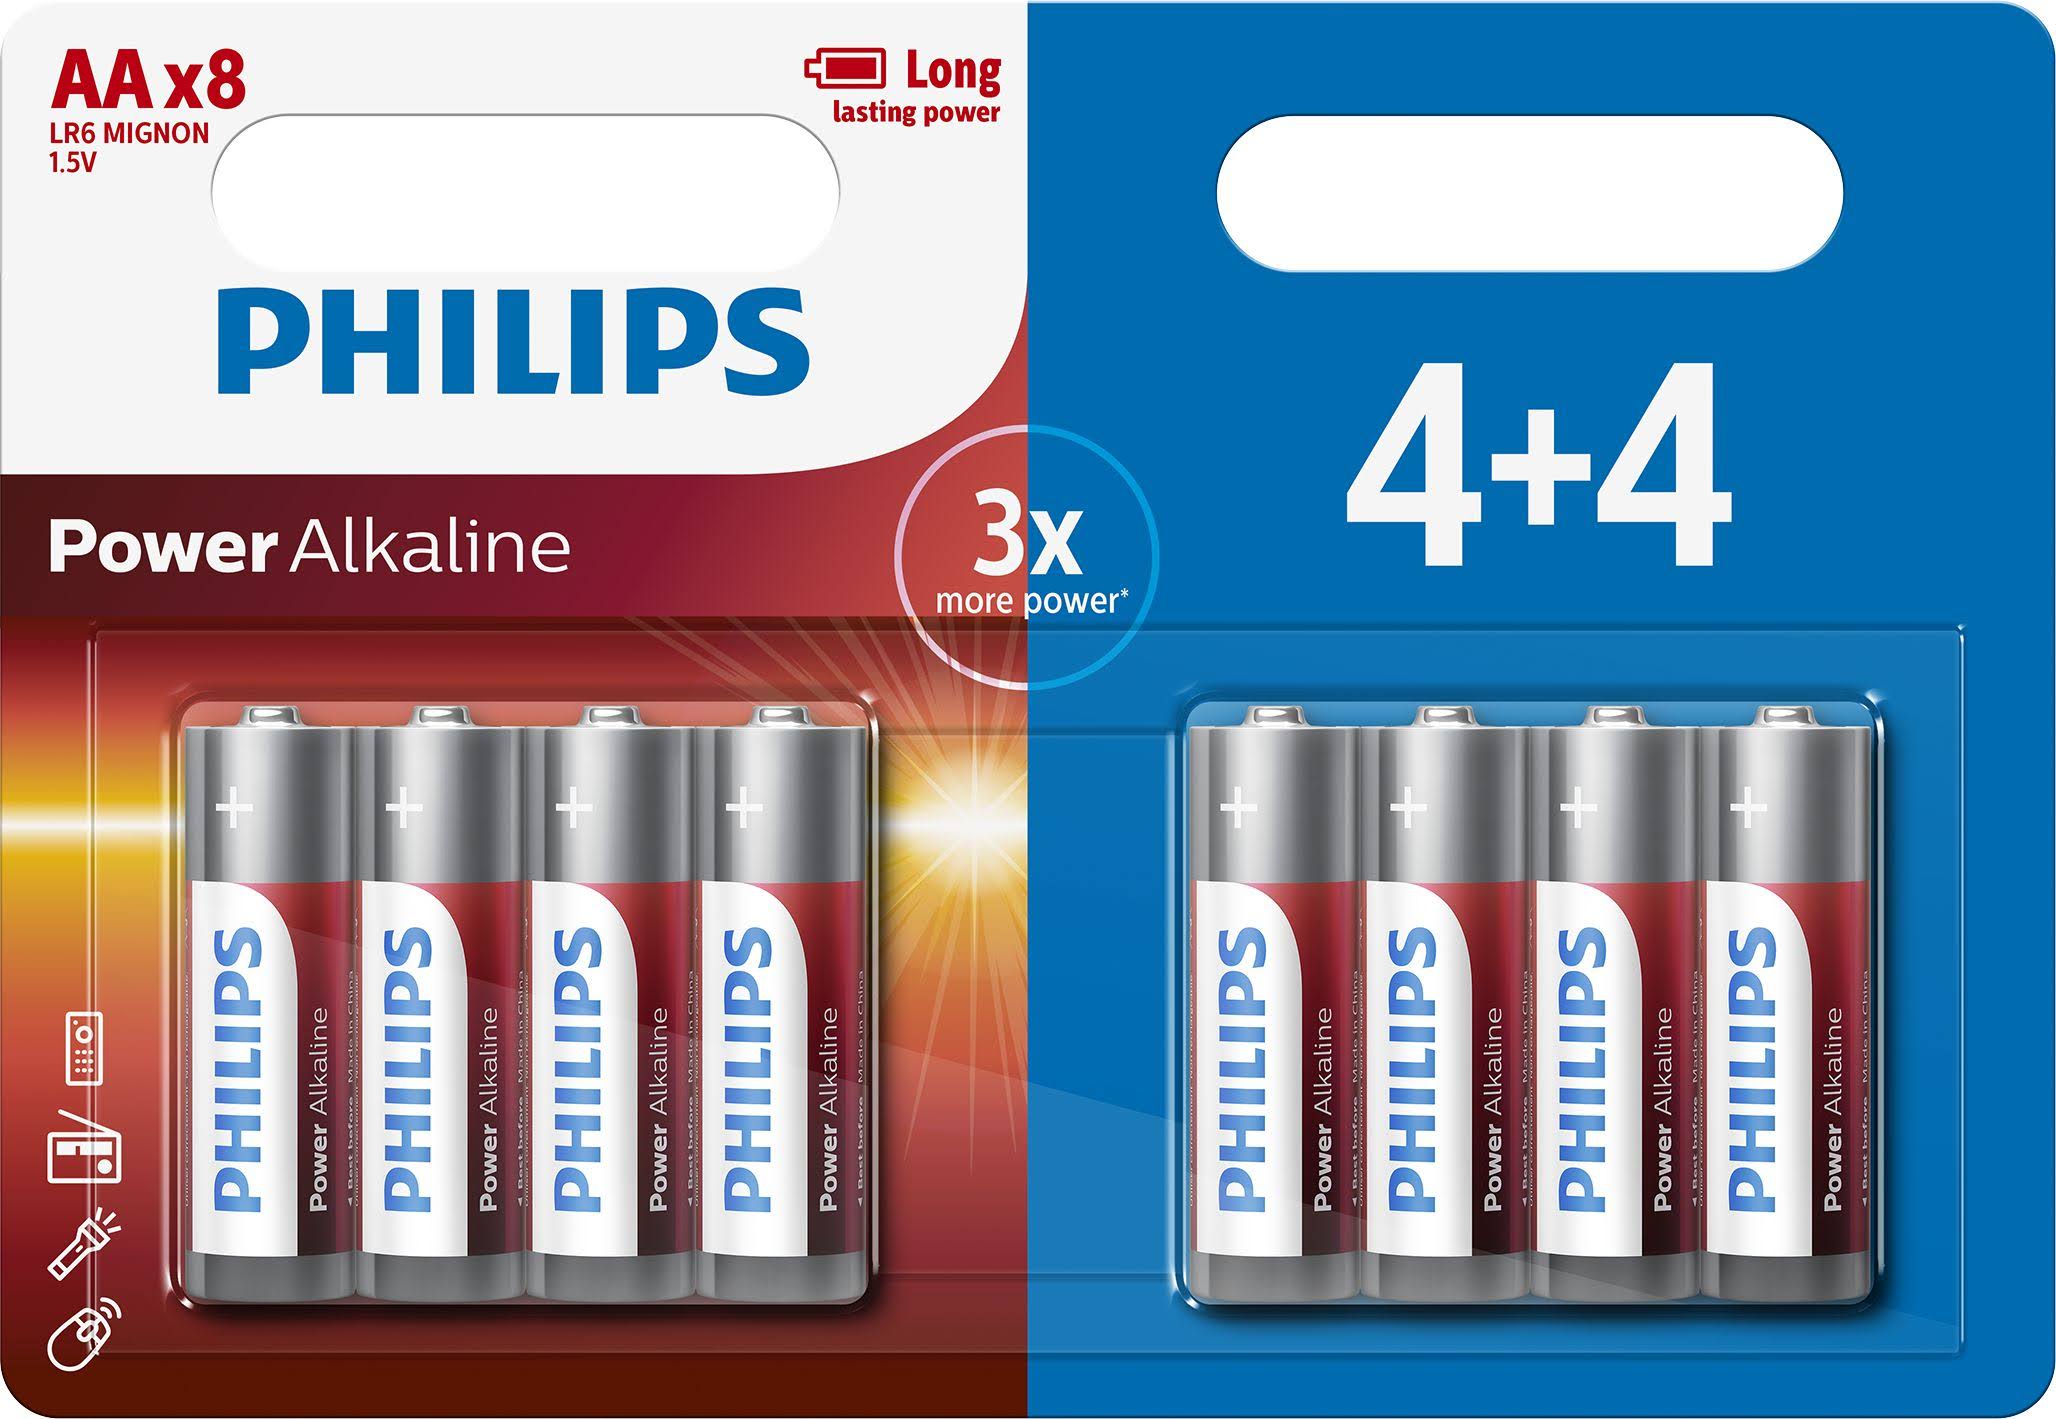 Phillips Ultra Alkaline AA LR6 Batteries 8 Pack - Assorted